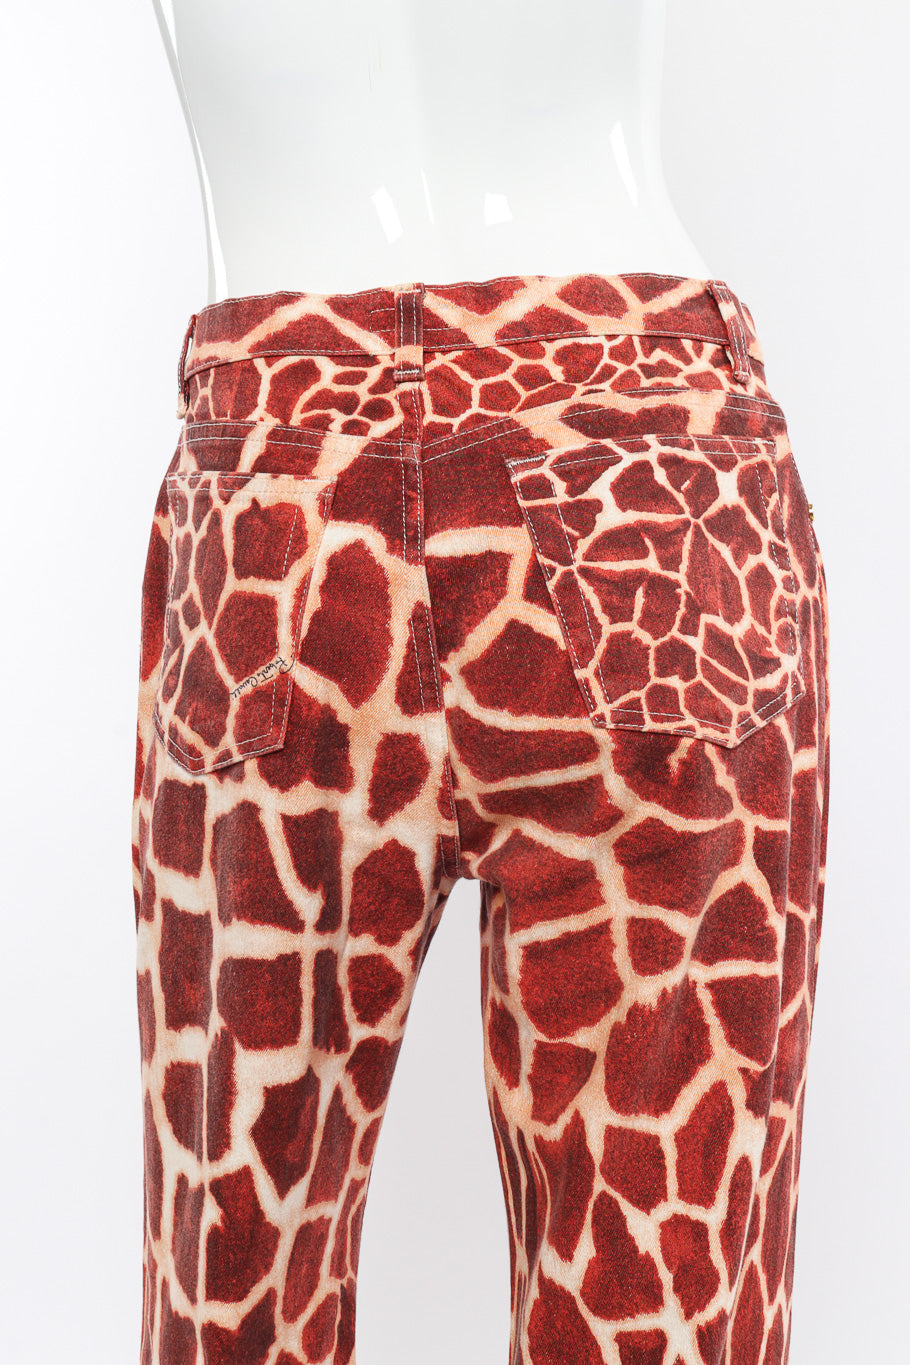 Vintage Roberto Cavalli Giraffe Print Flare Jeans back view on mannequin closeup of waist @Recessla